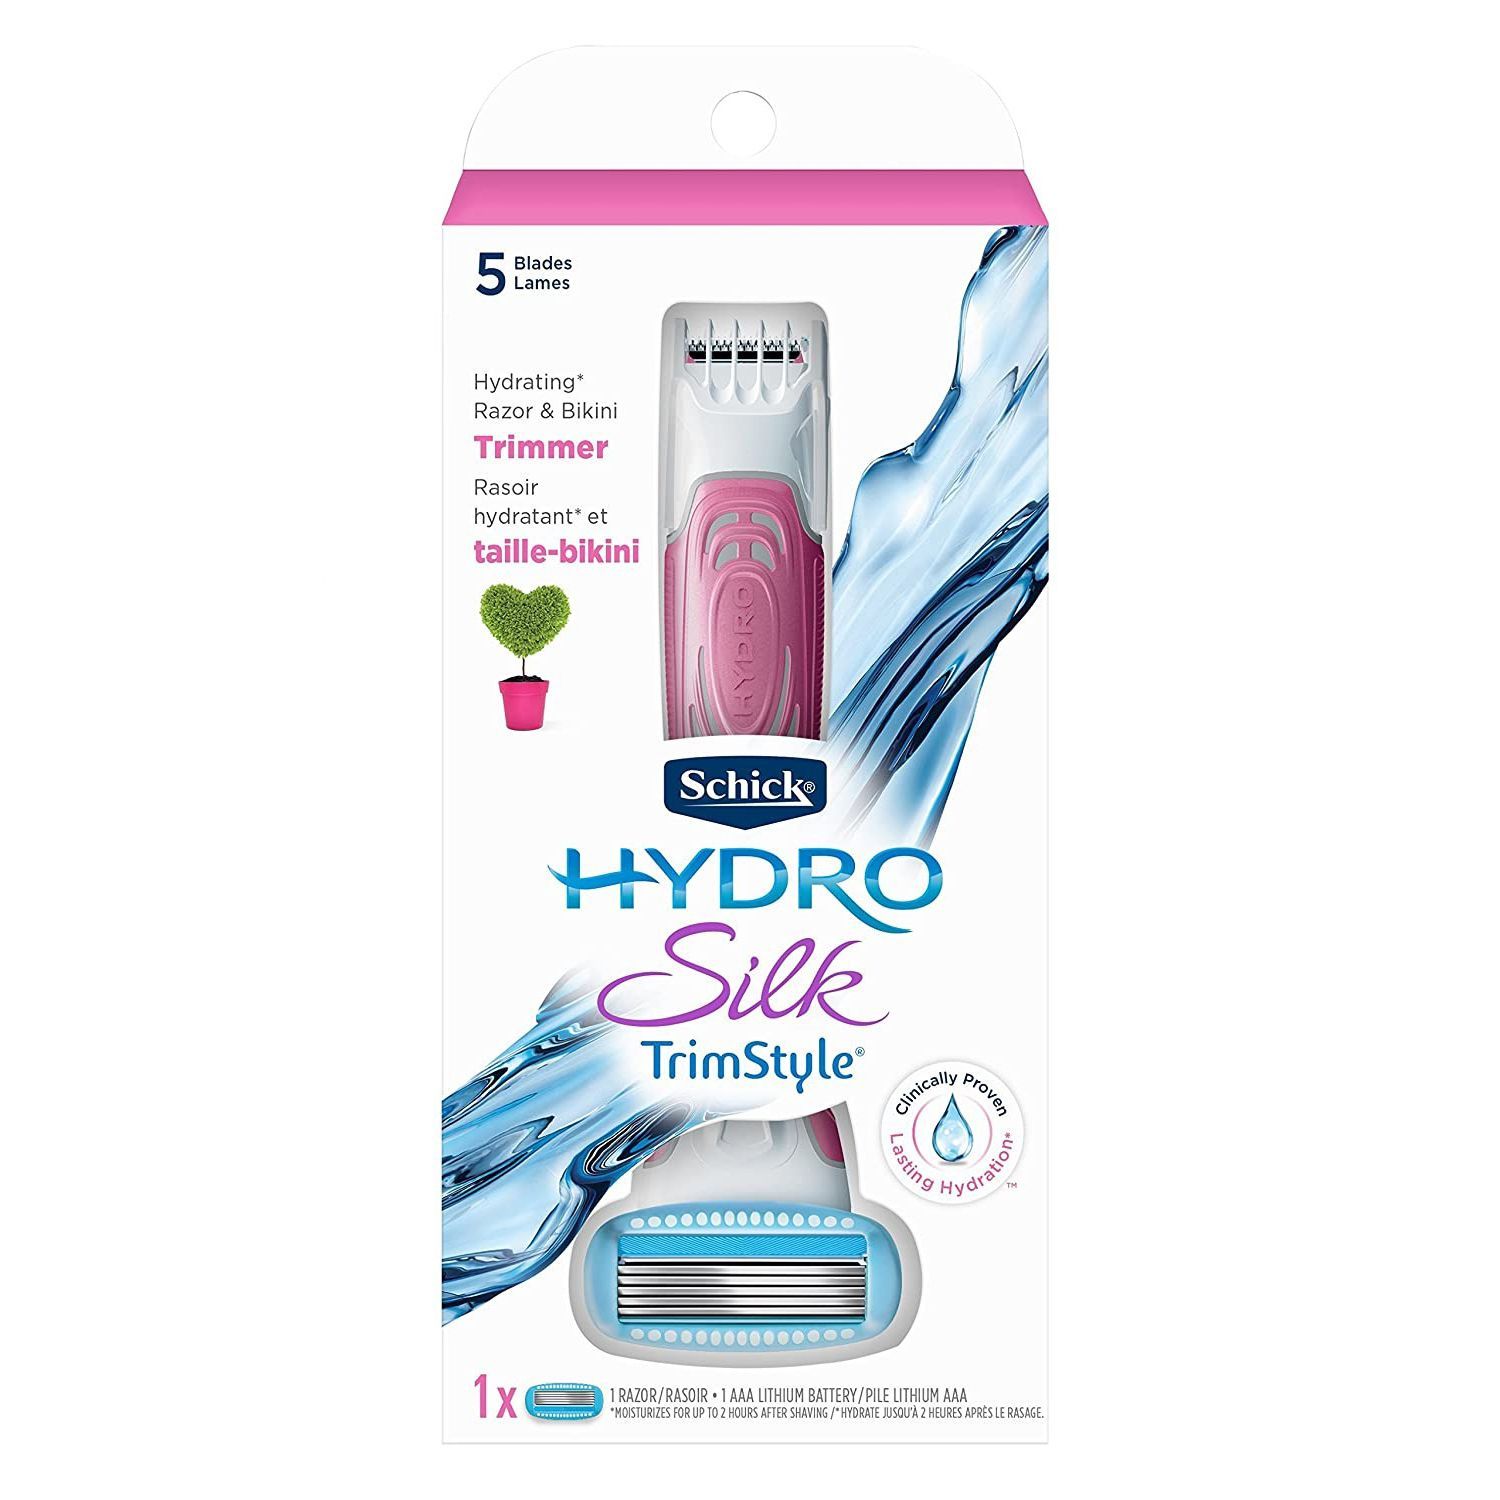 Hydro Silk TrimStyle Razor with Bikini Trimmer